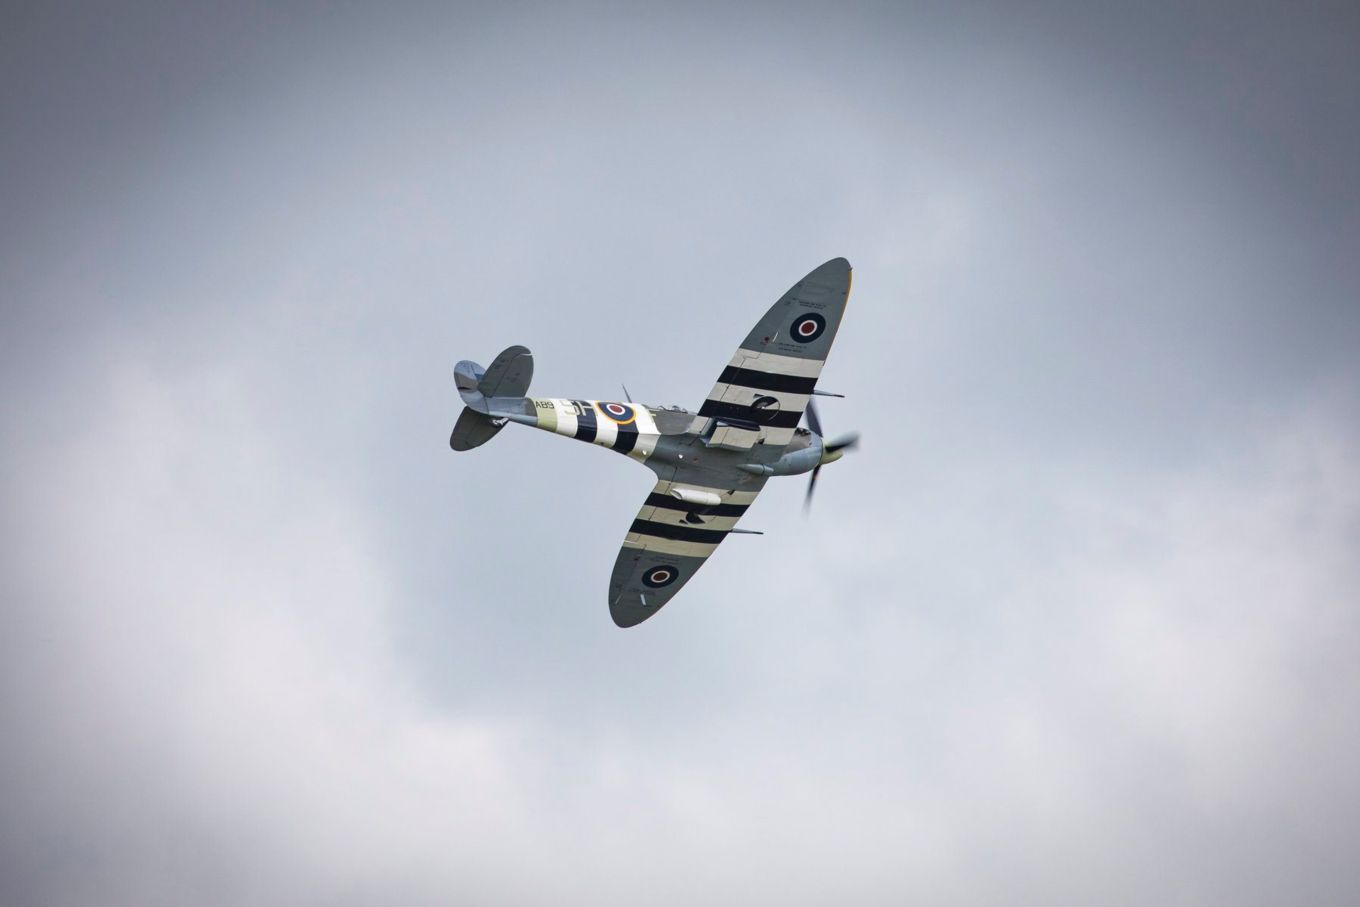 A Spitfire in flight.